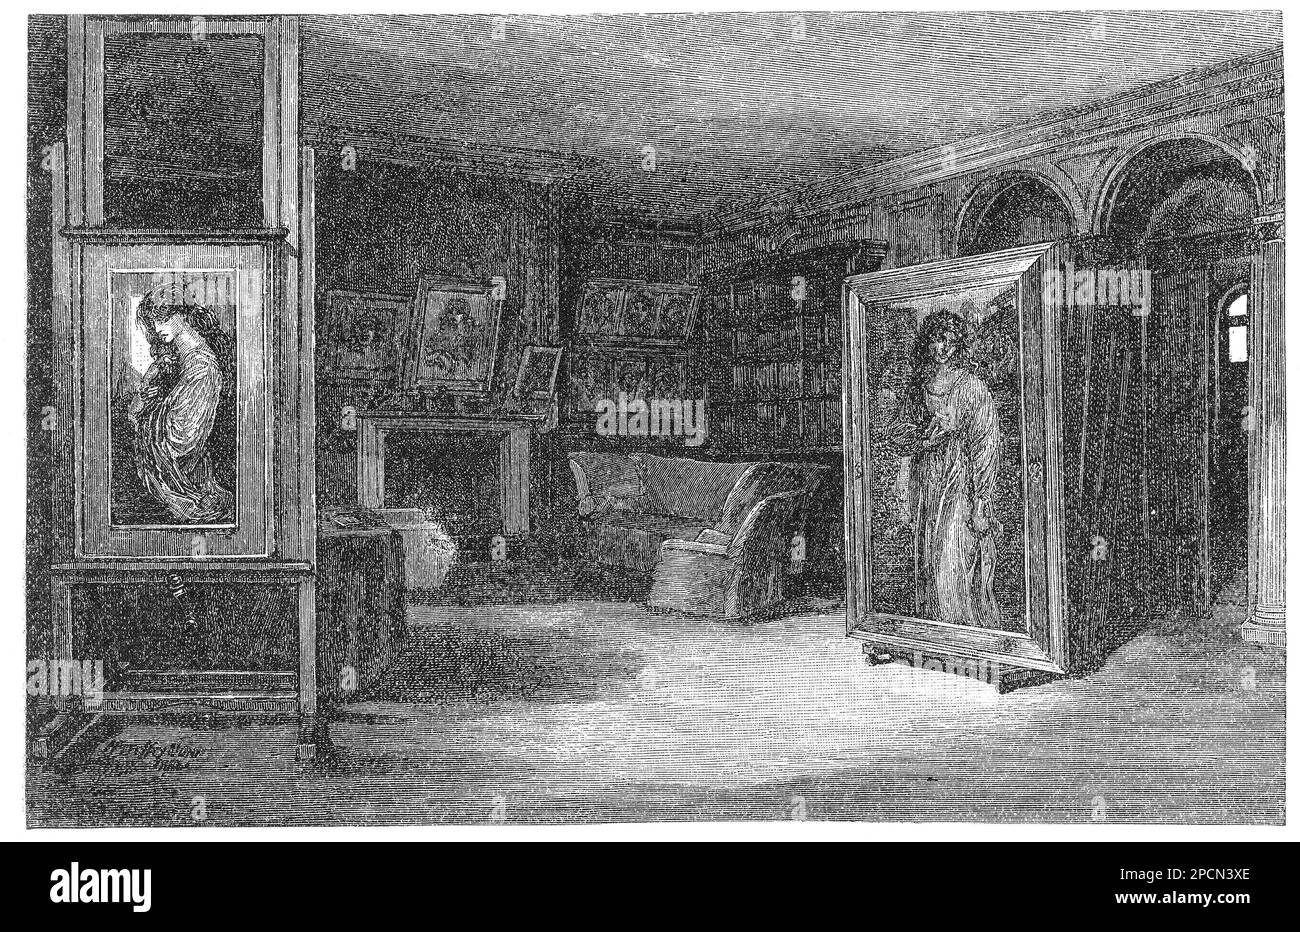 The house-studio of scandalous british painter DANTE GABRIEL ROSSETTI ( 1828 - 1882 ), influenced by the Pre-Raphaellite movement of BROTHERWOOD with William Hunt ,  Ford Madox Brown  and John Everett Millais .  - PITTORE - PITTURA - ARTI VISIVE  - ARTE - ARTS - ATELIER - STUDIO  - bohemien - maudit - artista maledetto - Gabriele - PRERAFFAELLITISMO - PRERAPHAELITE - PRERAFFAELLITA - PRERAFFAELLISMO - PRERAPHAELISM - incisione - engraving ---  Archivio GBB Stock Photo